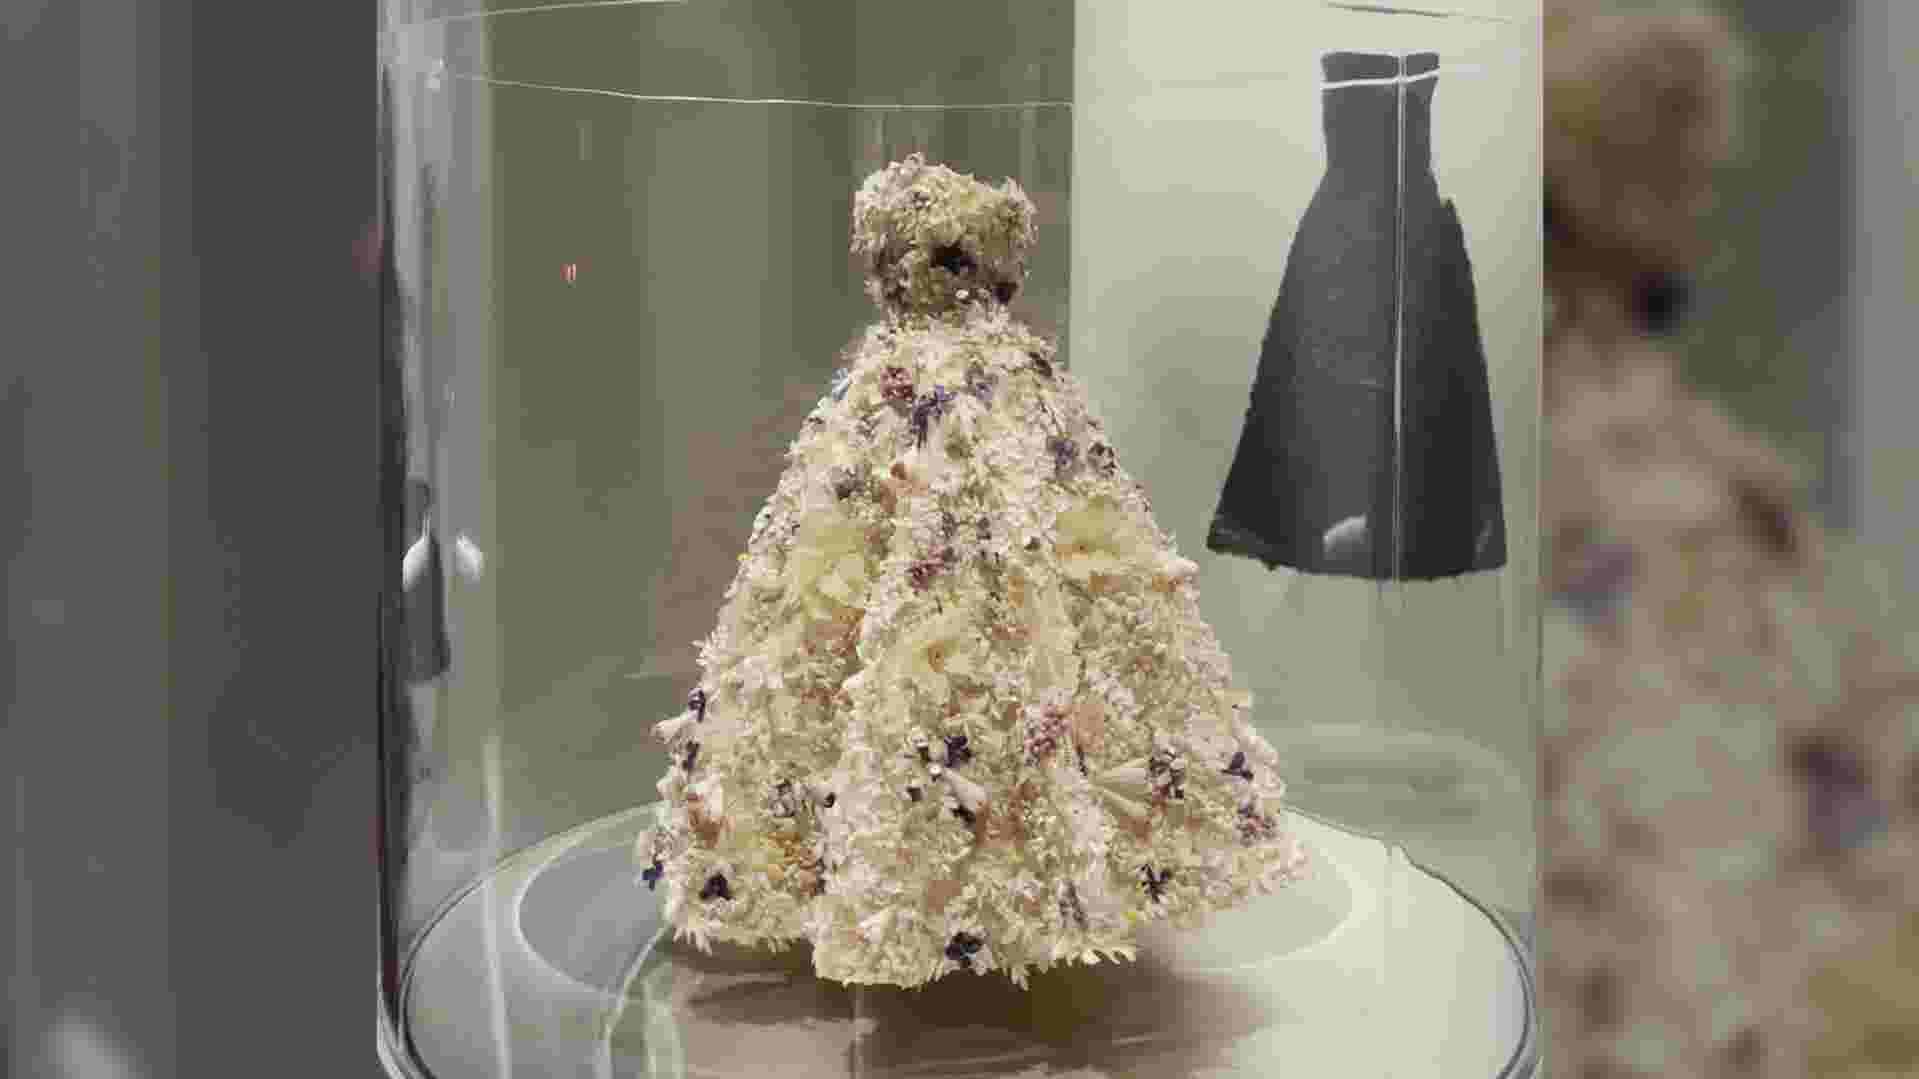 ‘Reawakening’ exhibit at Met Museum shows off dresses from different eras